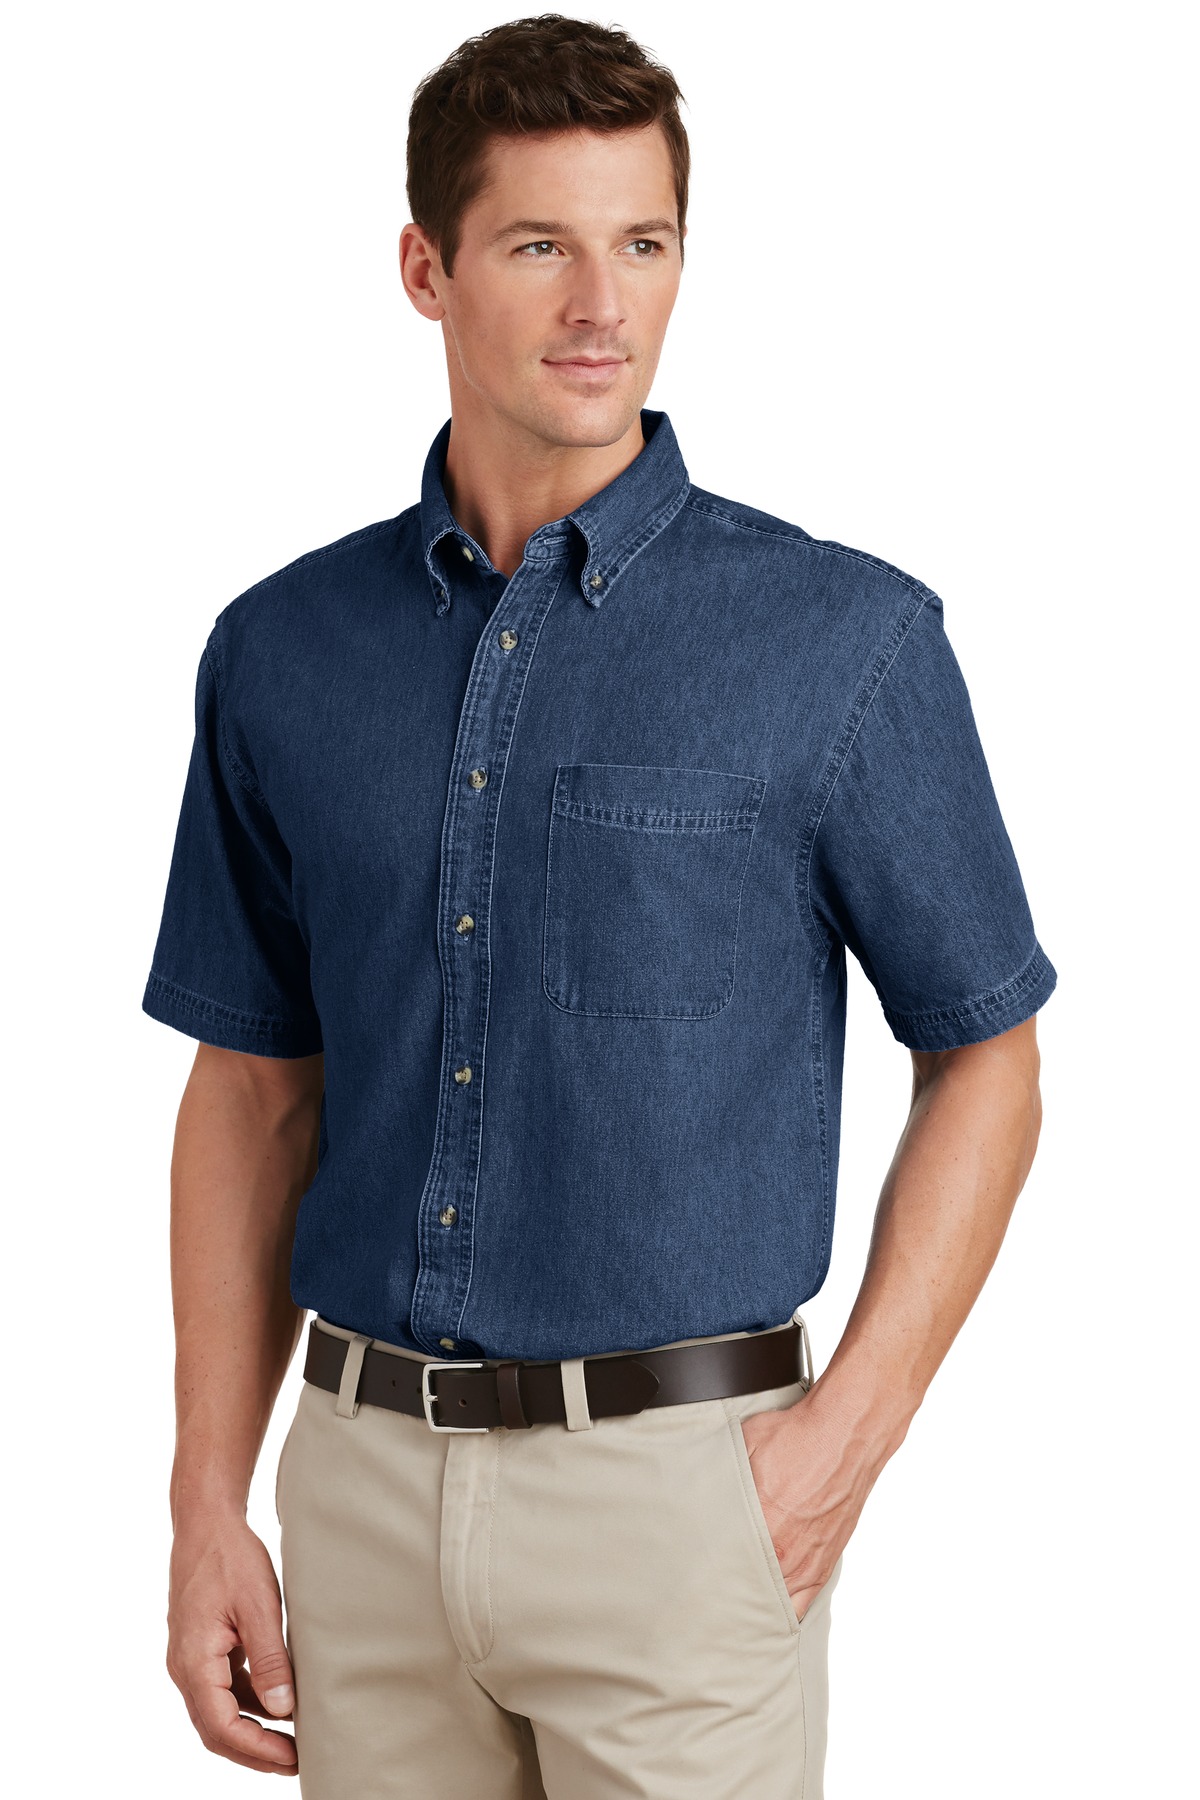 "Port & Company Short Sleeve Value Denim Shirt (SP11) Ink Blue, XL" - image 4 of 6